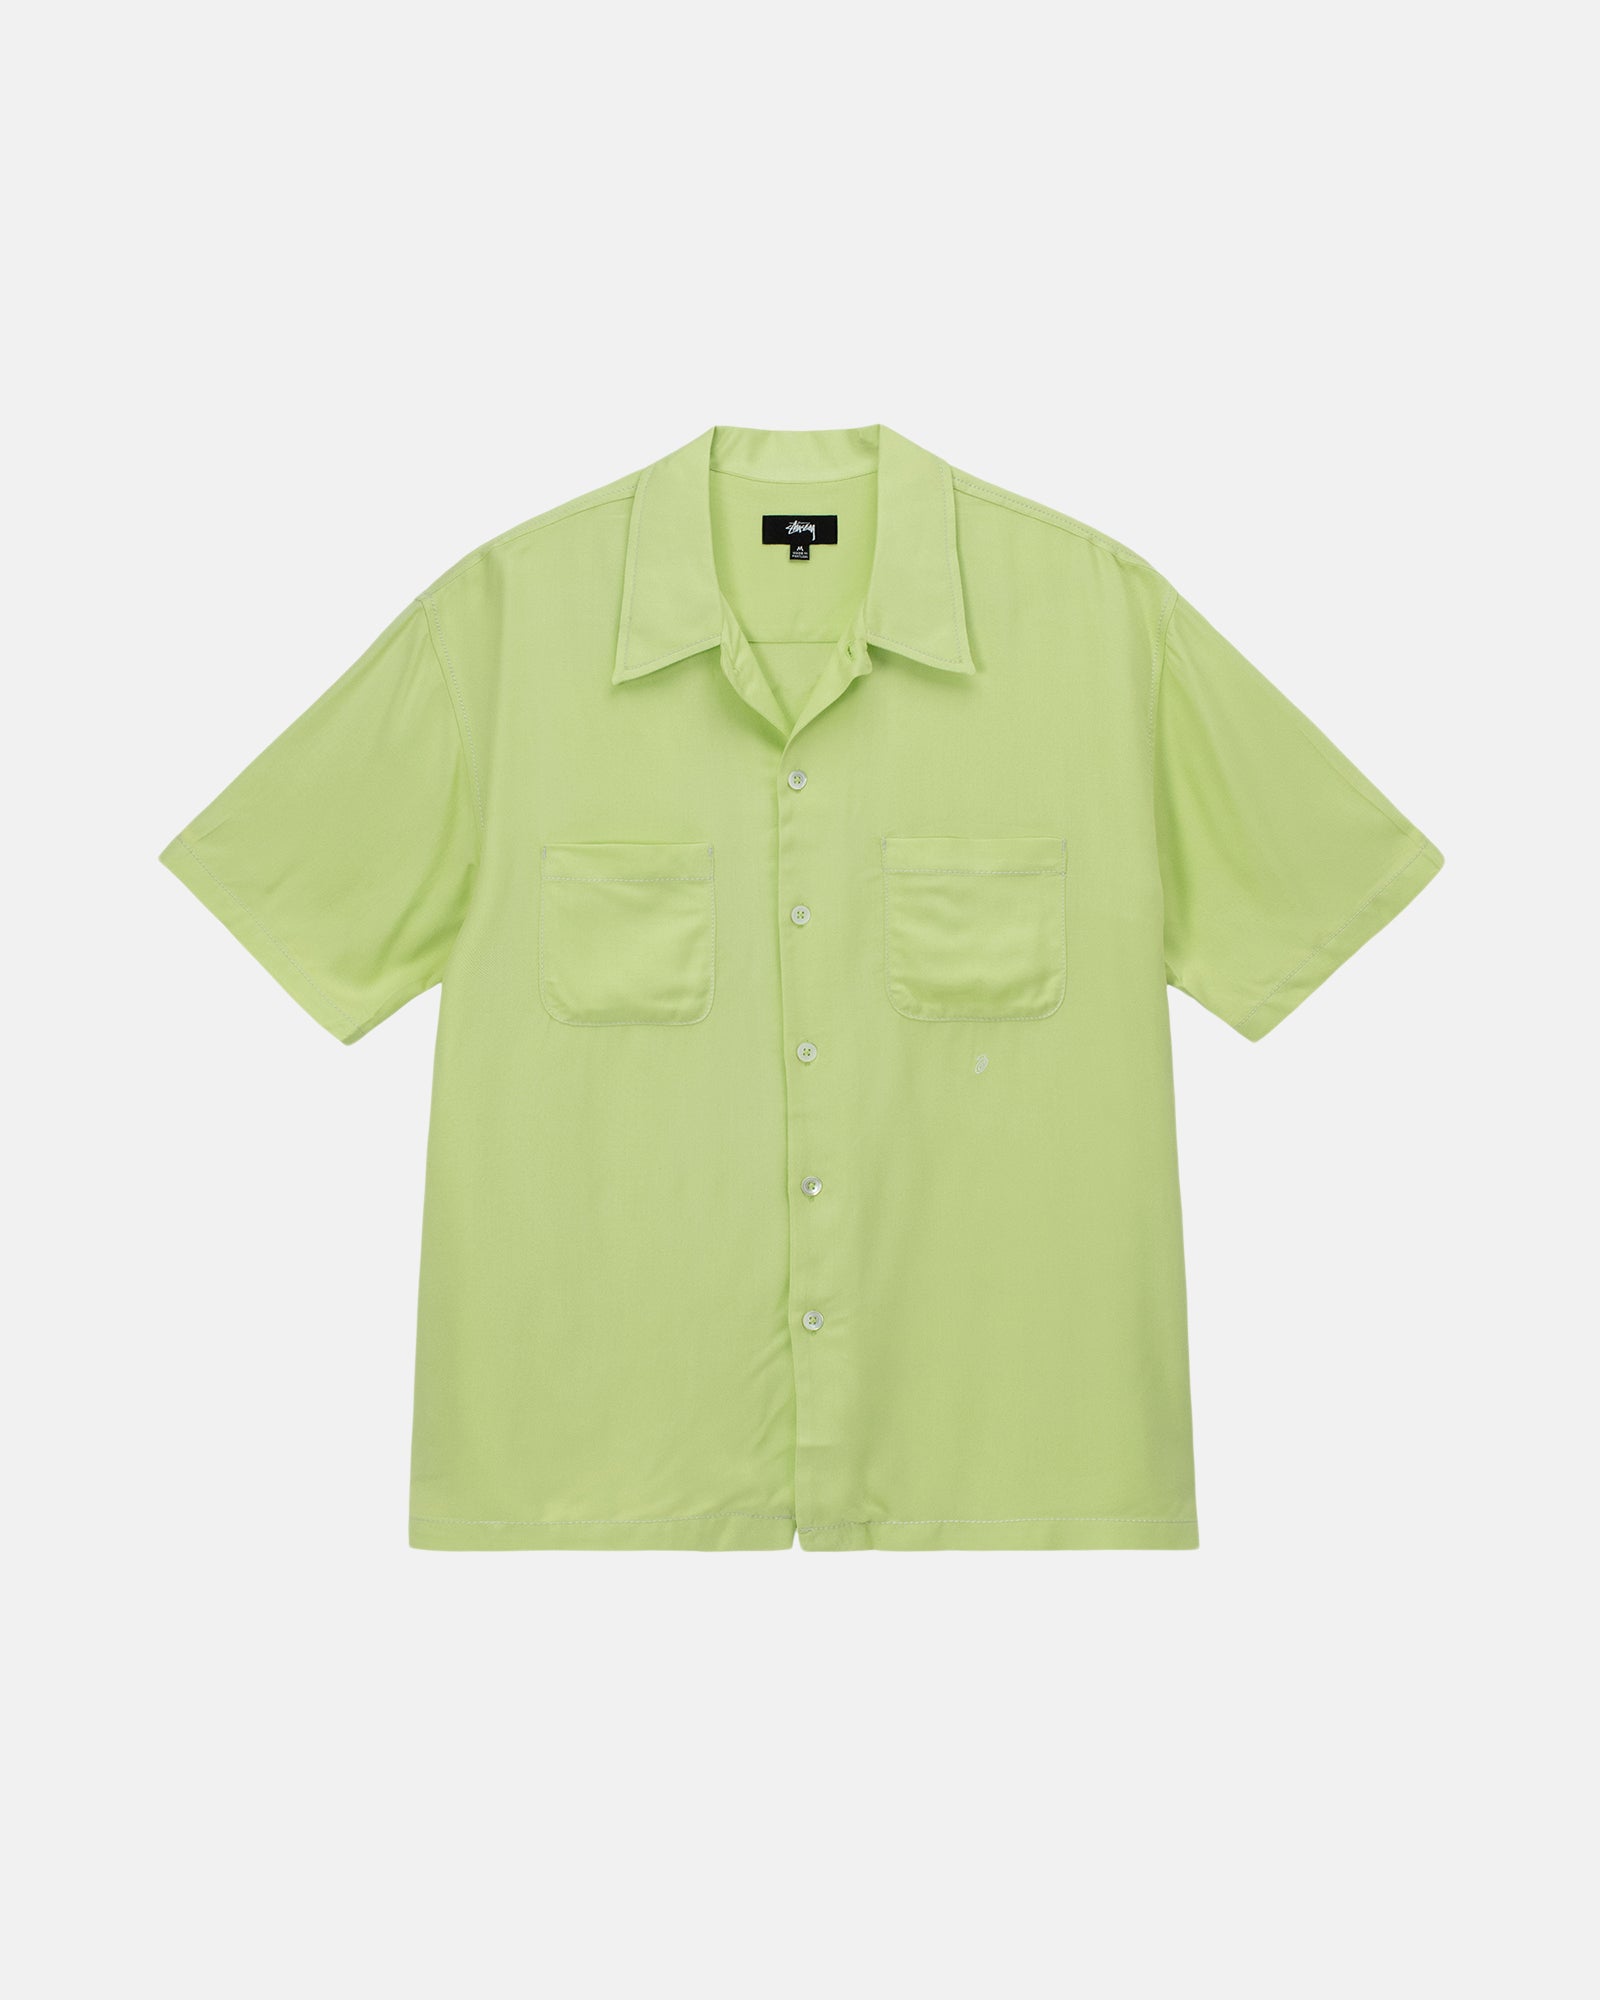 Contrast Pick Stitched Shirt - Unisex Tops & Shirts | Stüssy